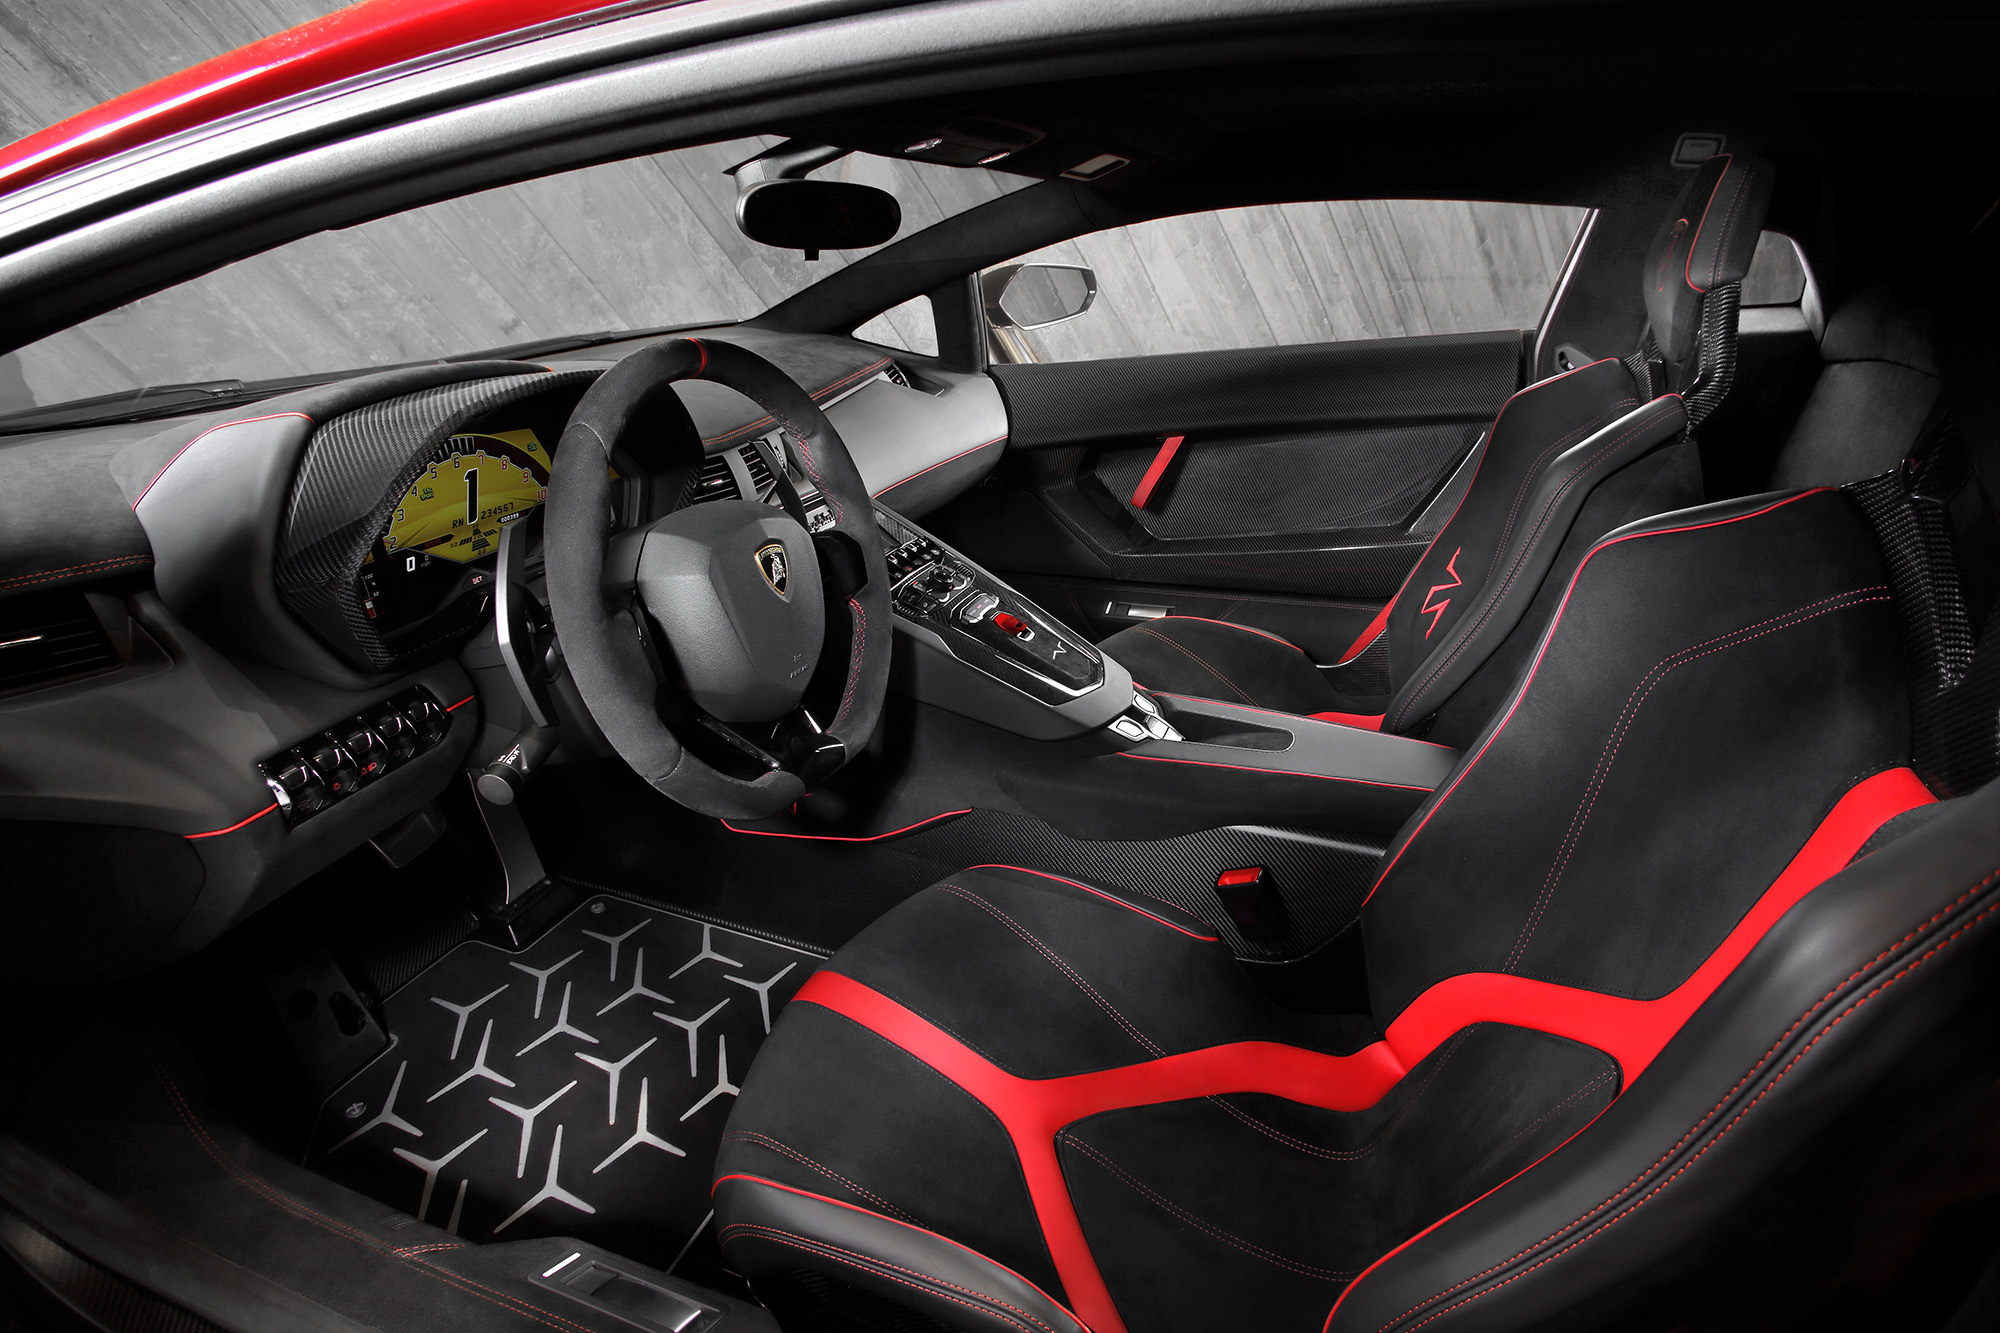 Lamborghini Aventador 750-4 SuperVeloce interior, launched at the 2015 Geneva Motor Show 